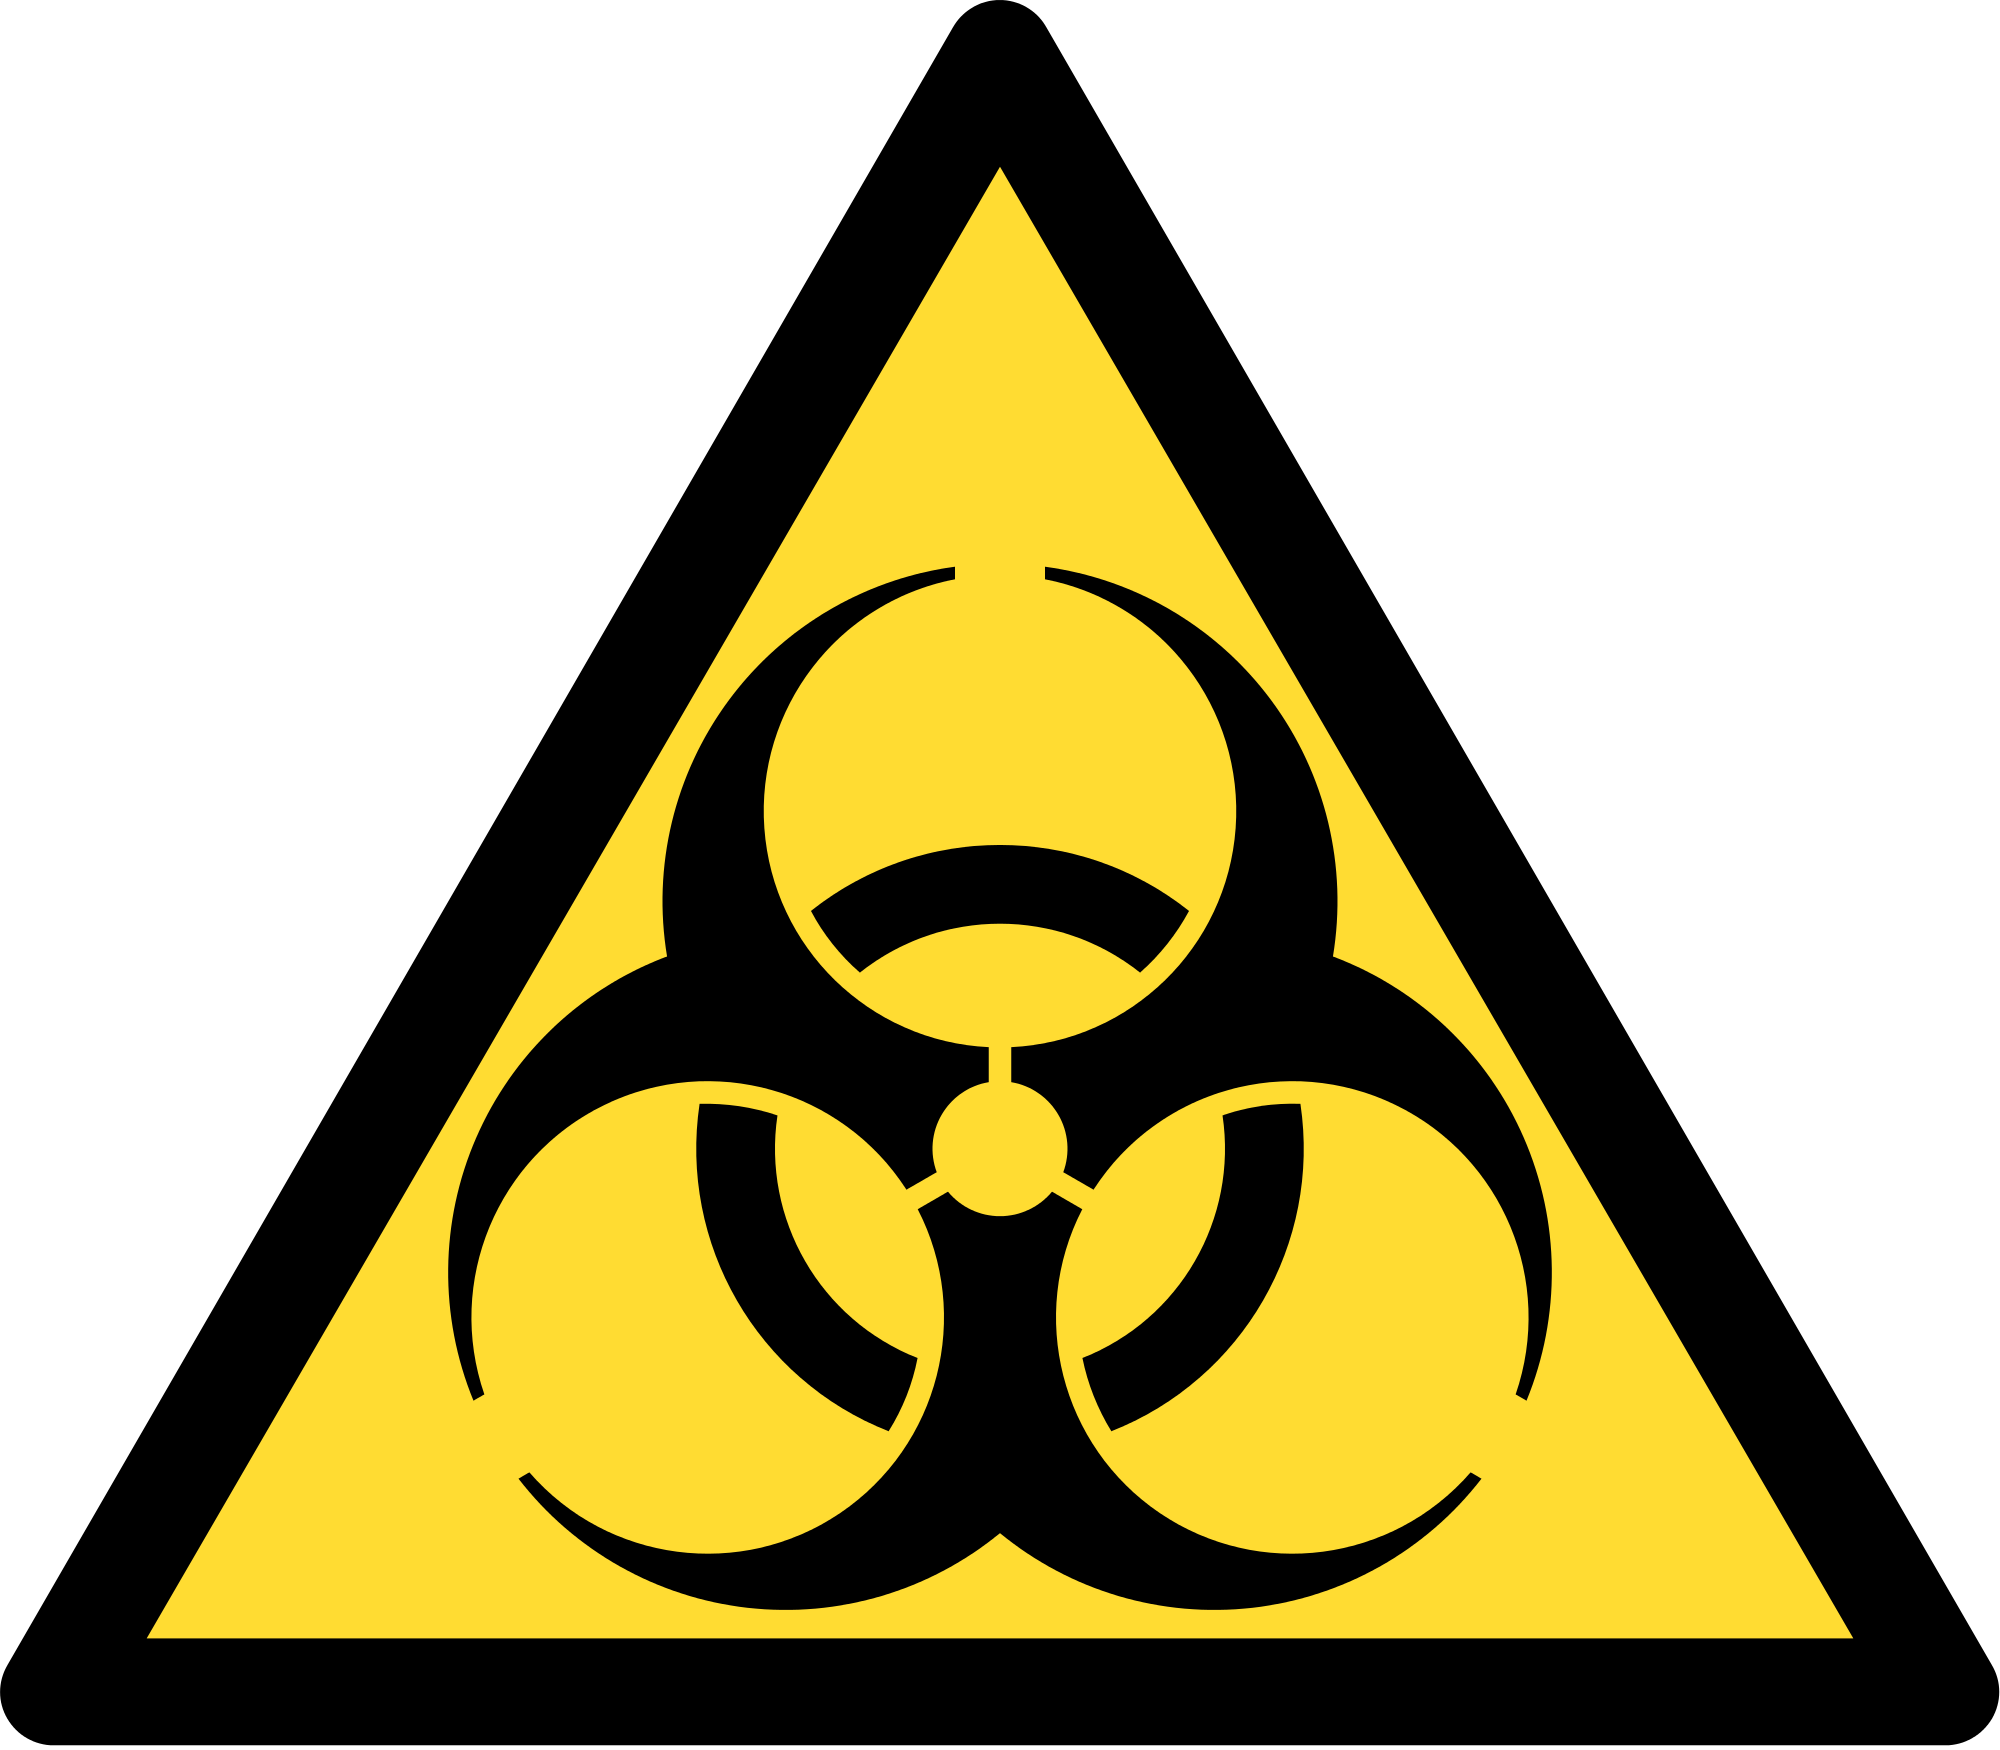 File:Biohazard.svg - Wikimedia Commons